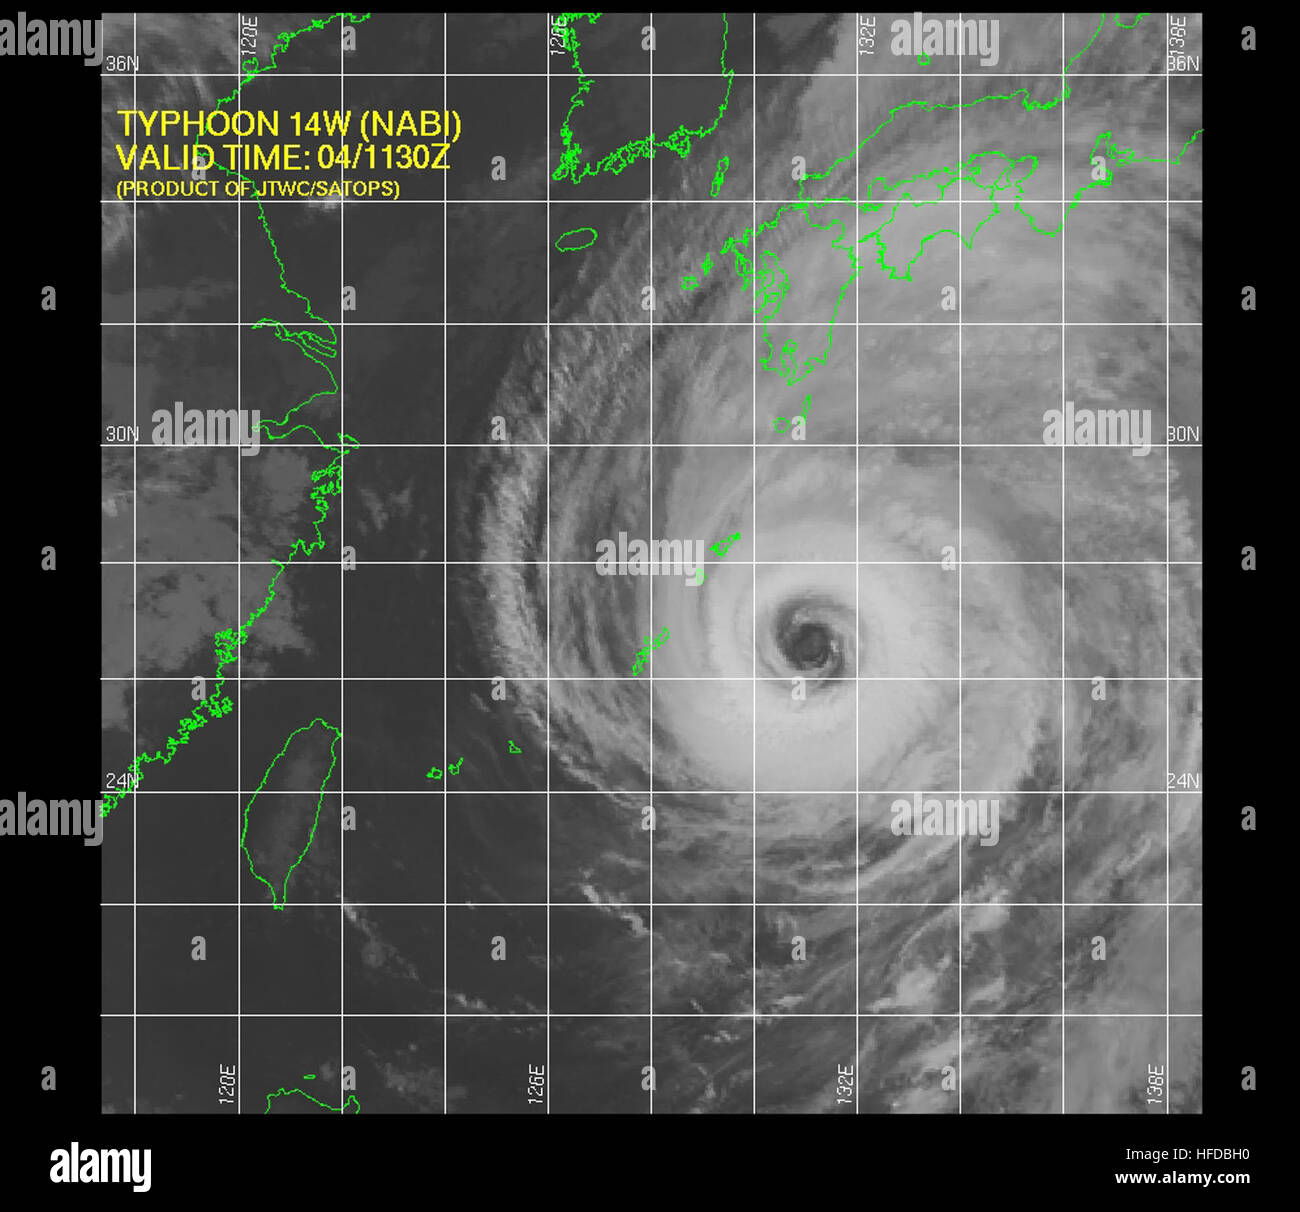 Typhoon 14W (Nabi) 2005-09-04-12-30-05 Foto Stock